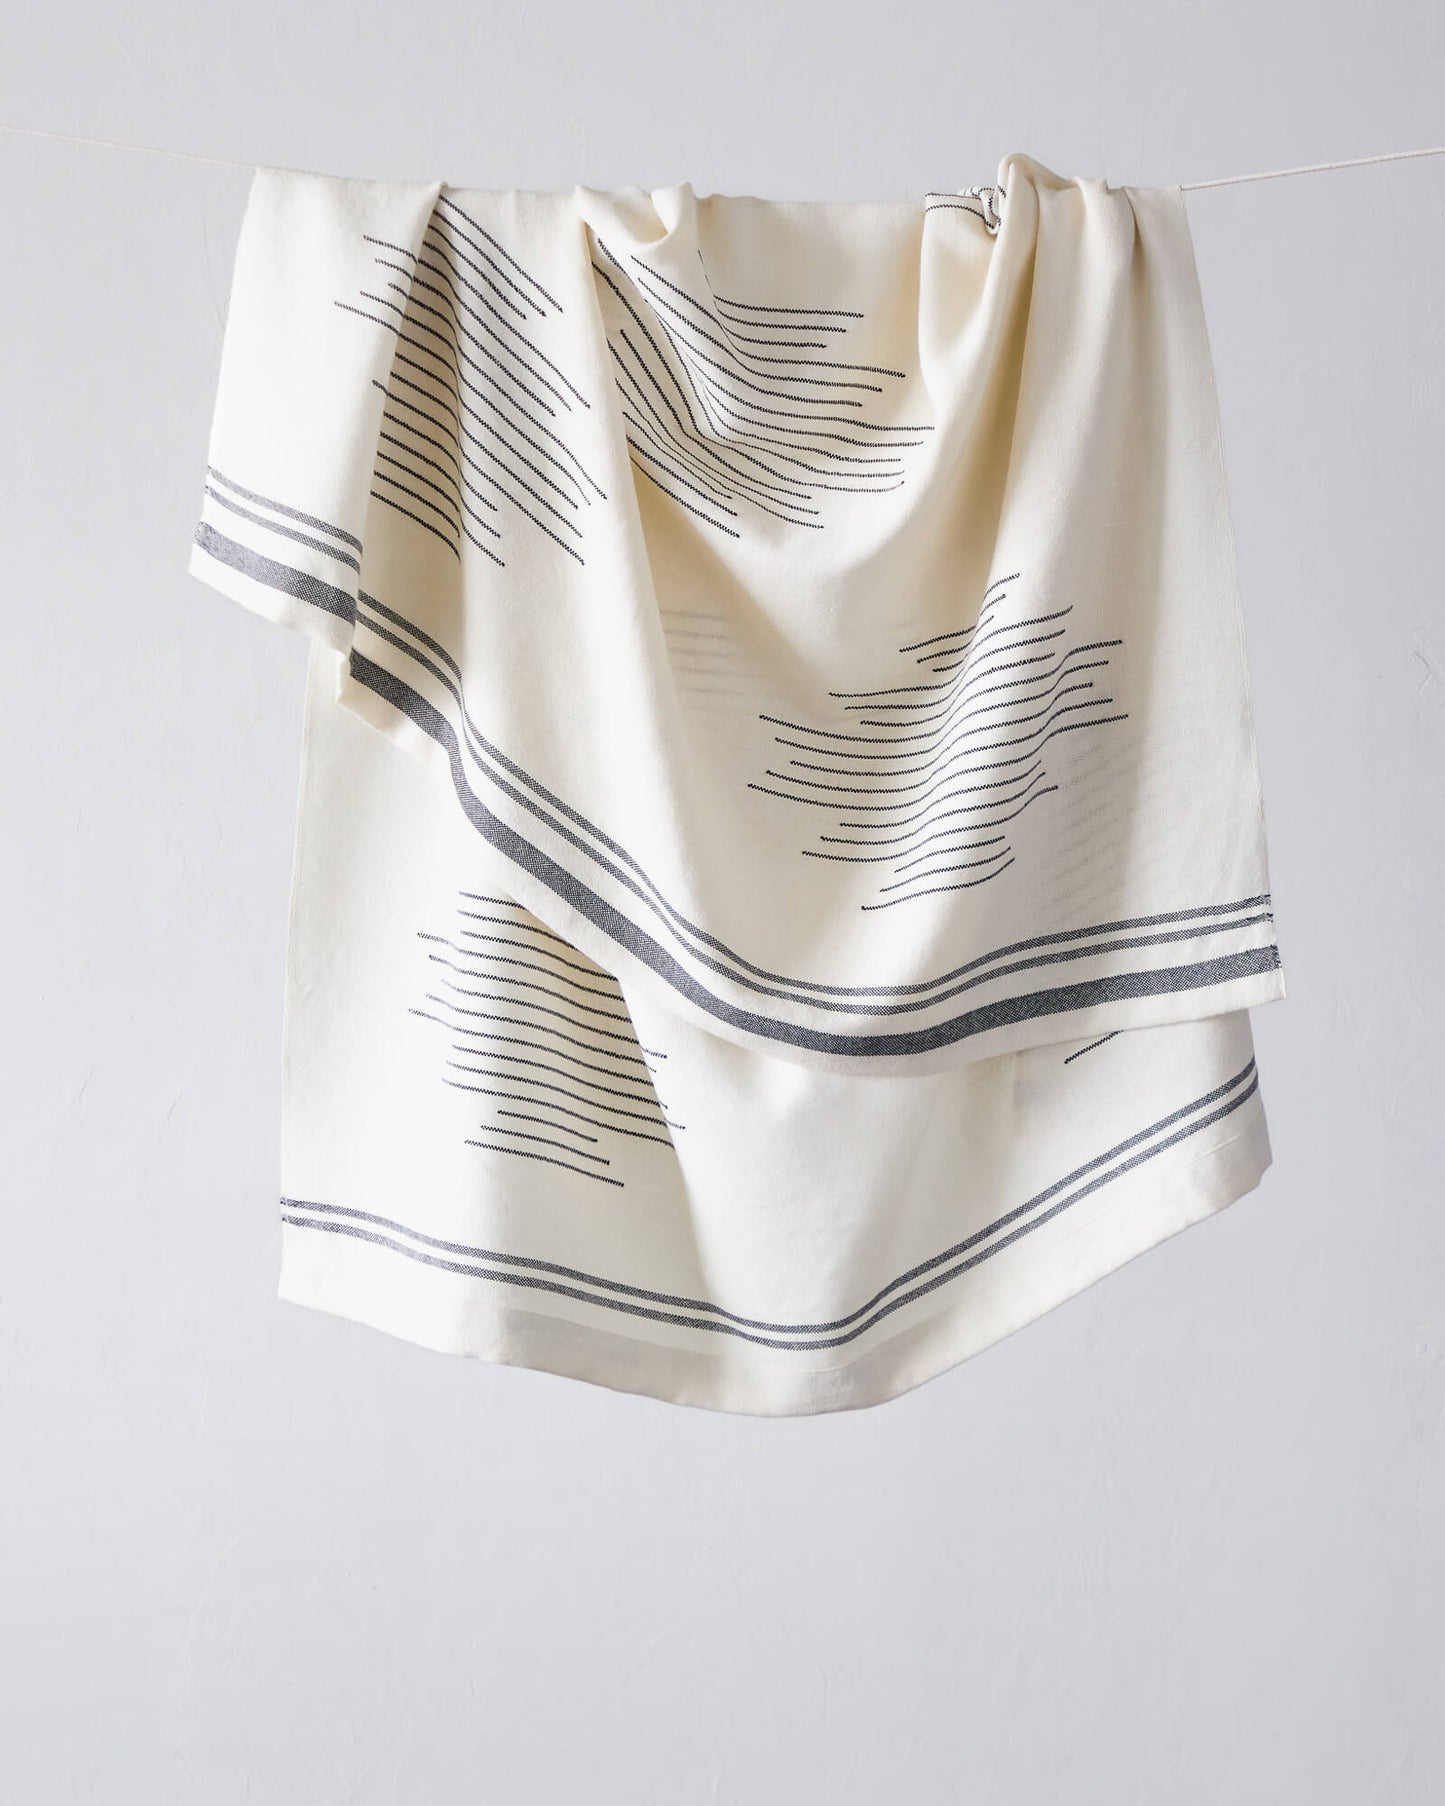 Fairkind Isleño luxury white and black alpaca throw blanket with folded edge and modern design.